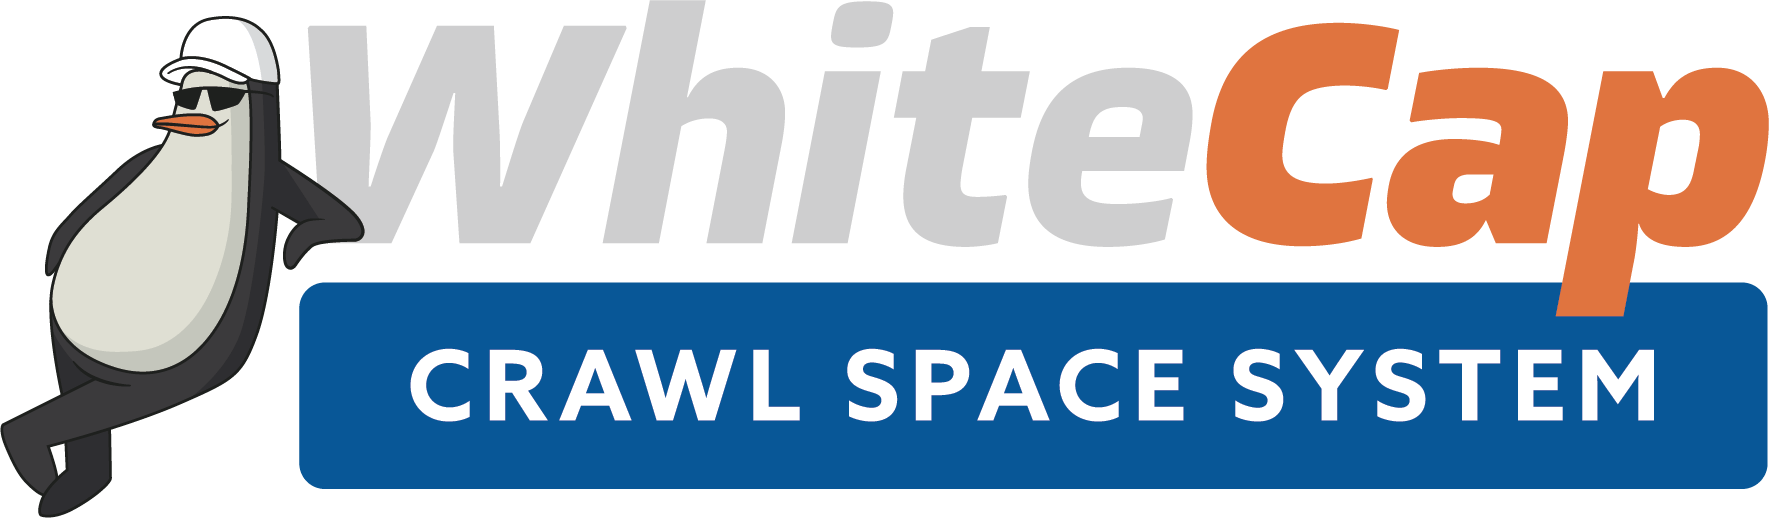 WhiteCap Crawl Space System